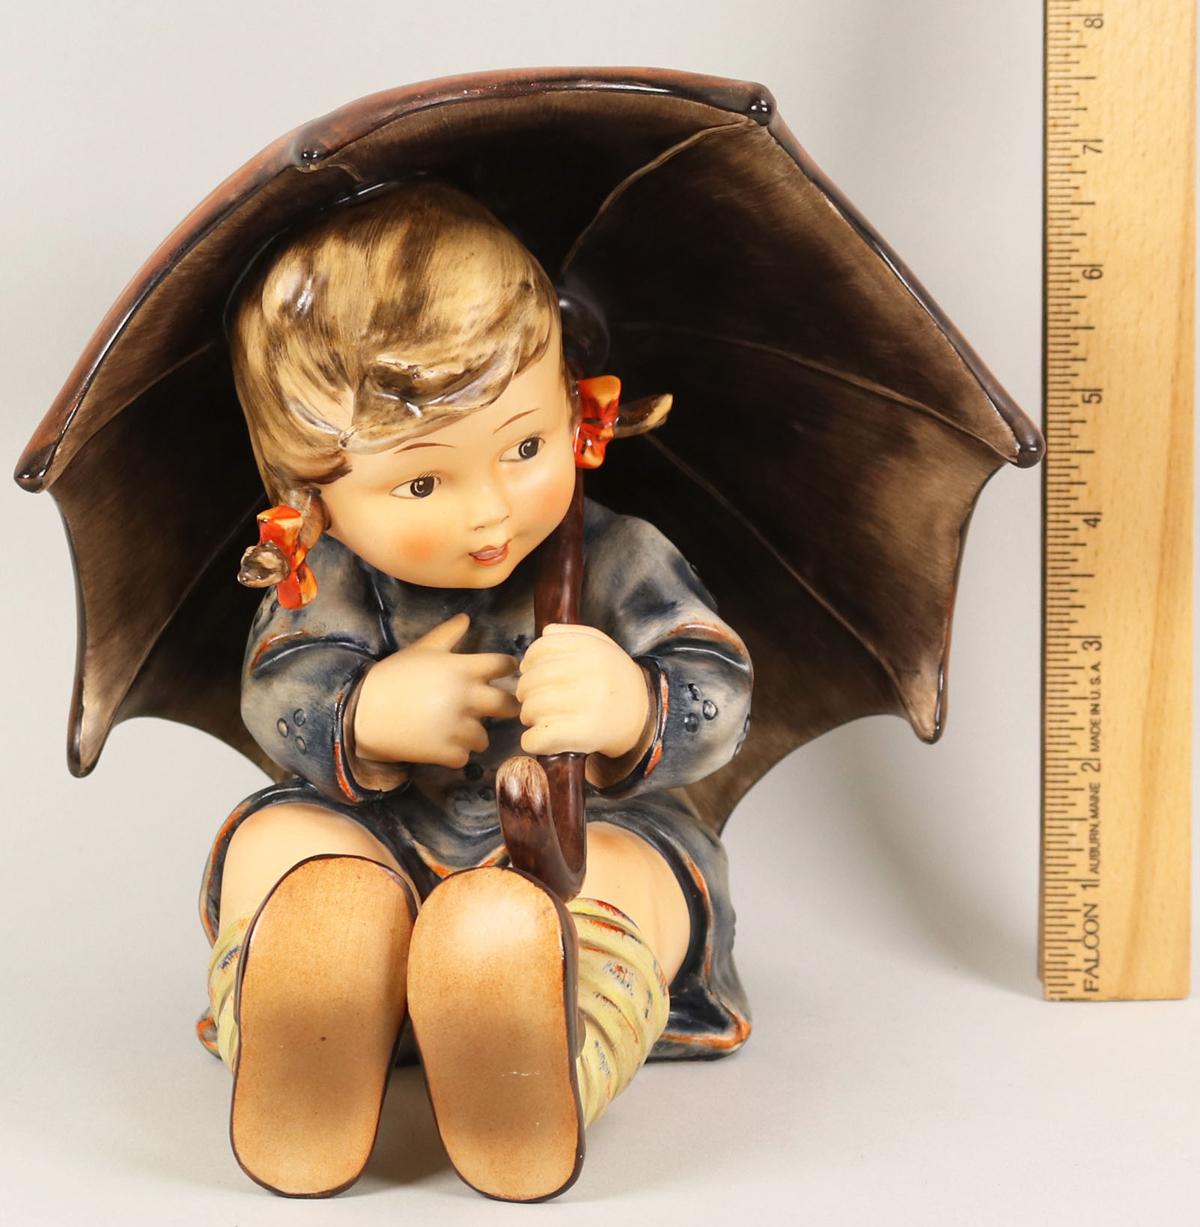 Large 8" "Umbrella Girl" Goebel Hummel Figurine, #152/B, Signed